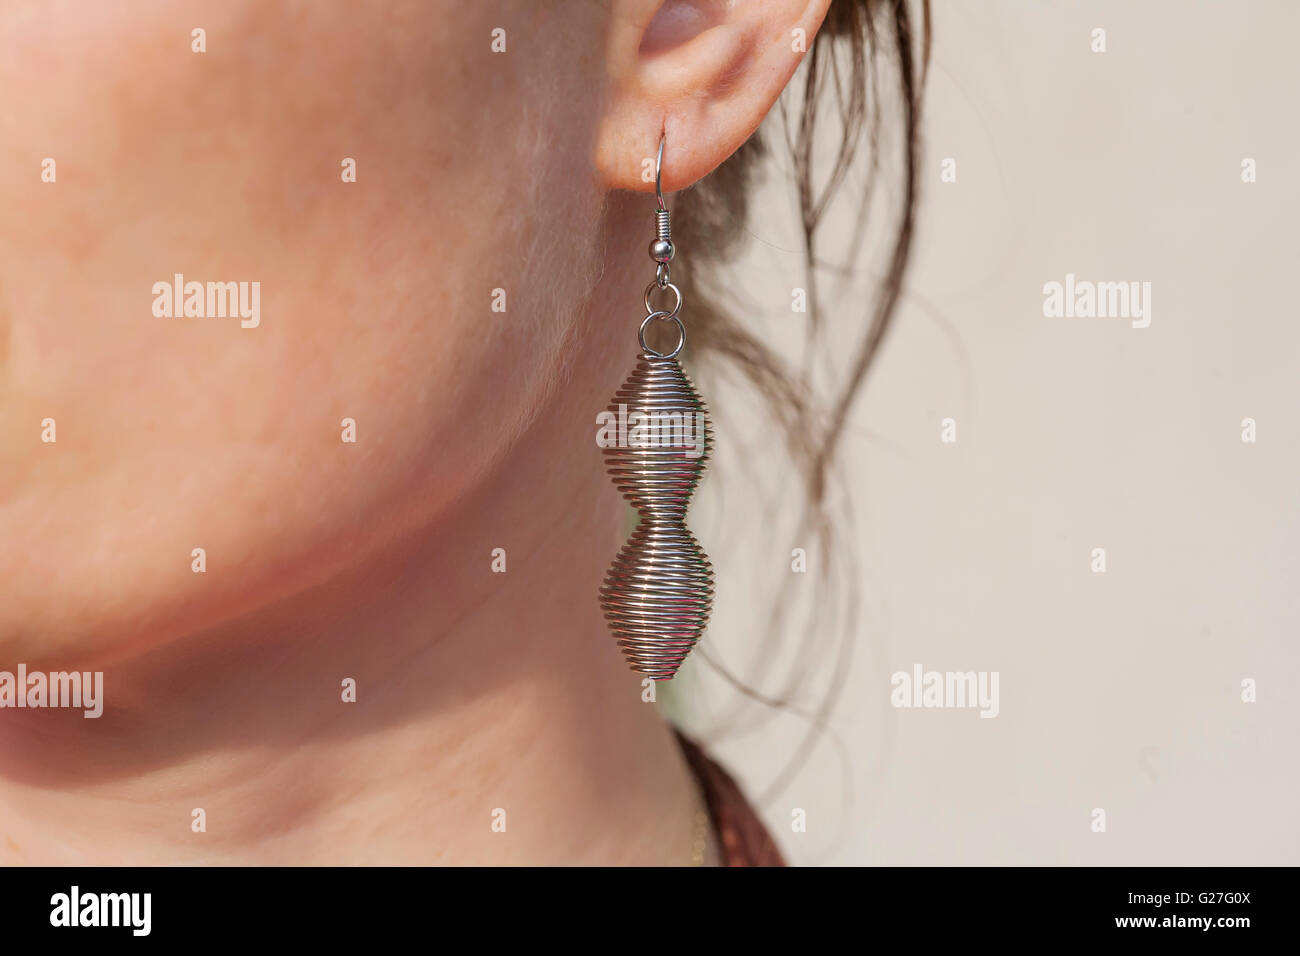 Spiral metal earring on female ear Stock Photo